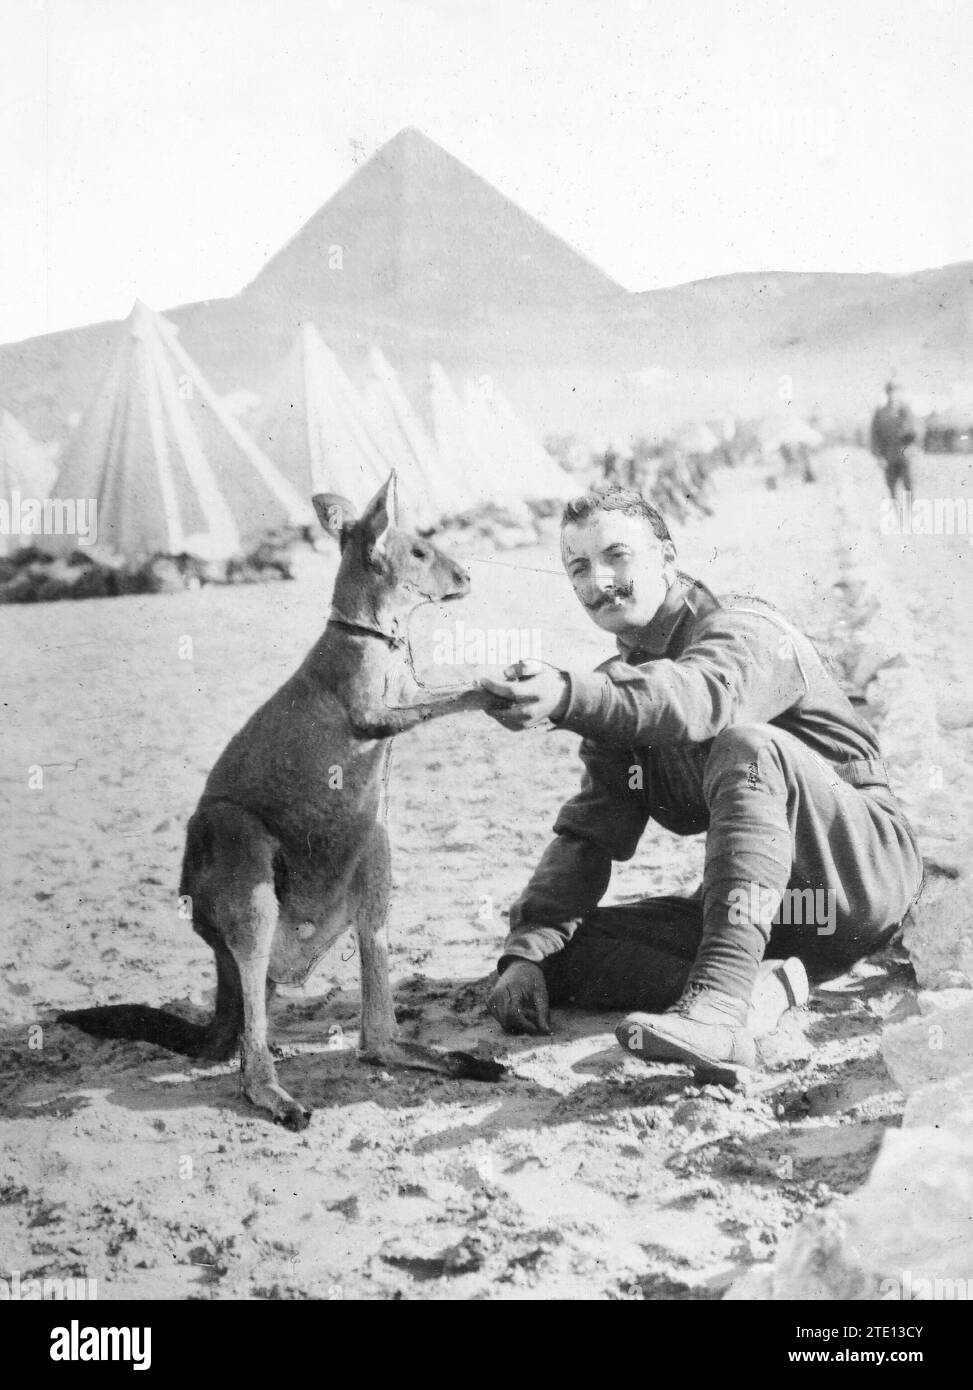 North Africa, year 1915. Originalities of the British army. The kangaroo, mascot belonging to one of the Australian regiments. Credit: Album / Archivo ABC / Parrondo Stock Photo